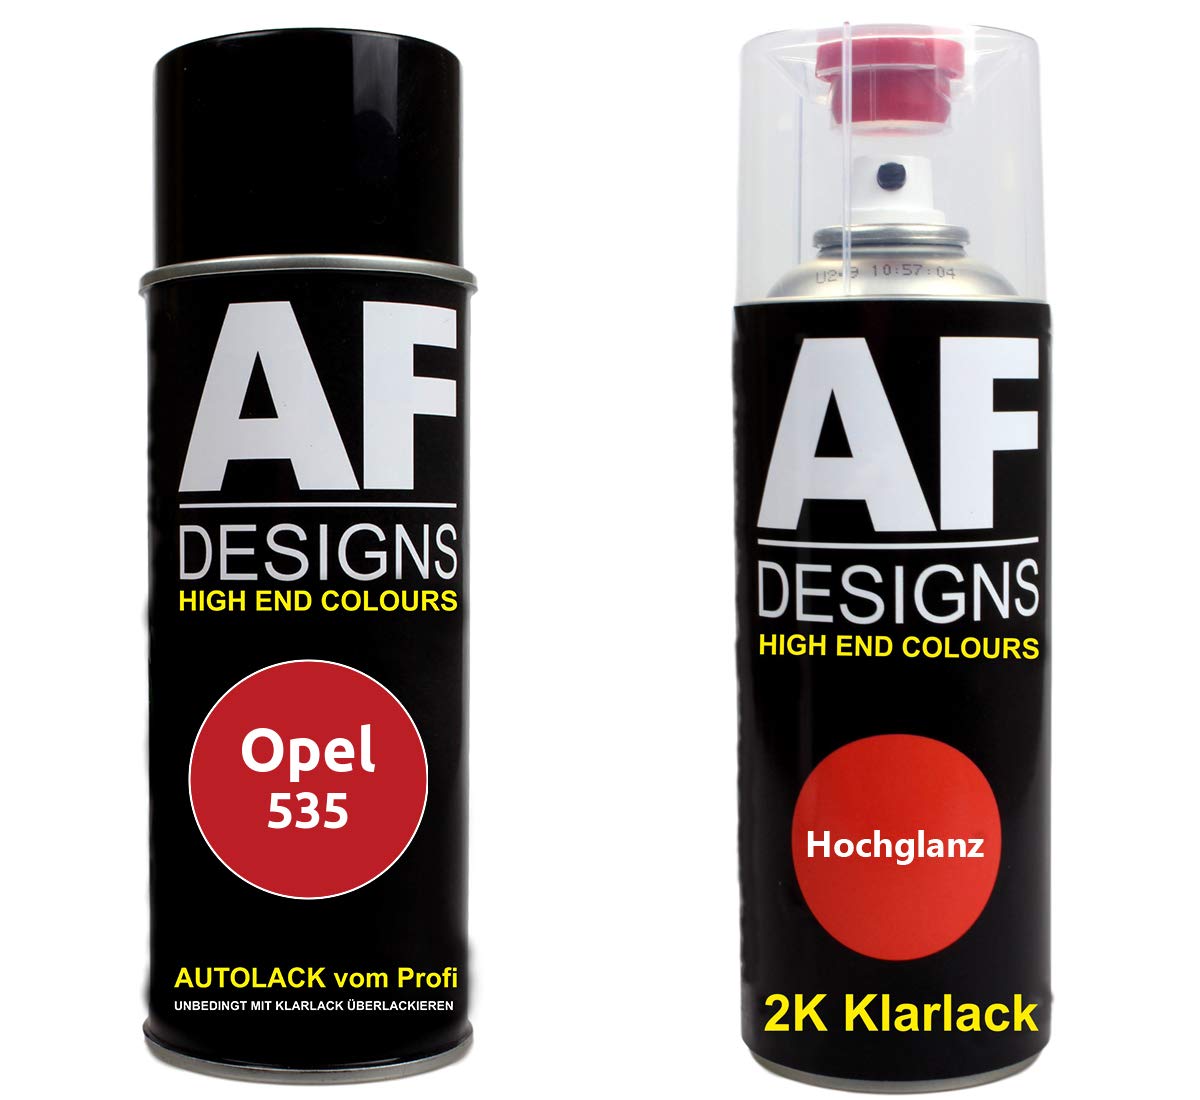 Alex Flittner Designs Autolack Spraydose Set für Opel 535 Karminrot 2K Klarlack Basislack Sprühdose Spraydosen 2x400ml von Alex Flittner Designs